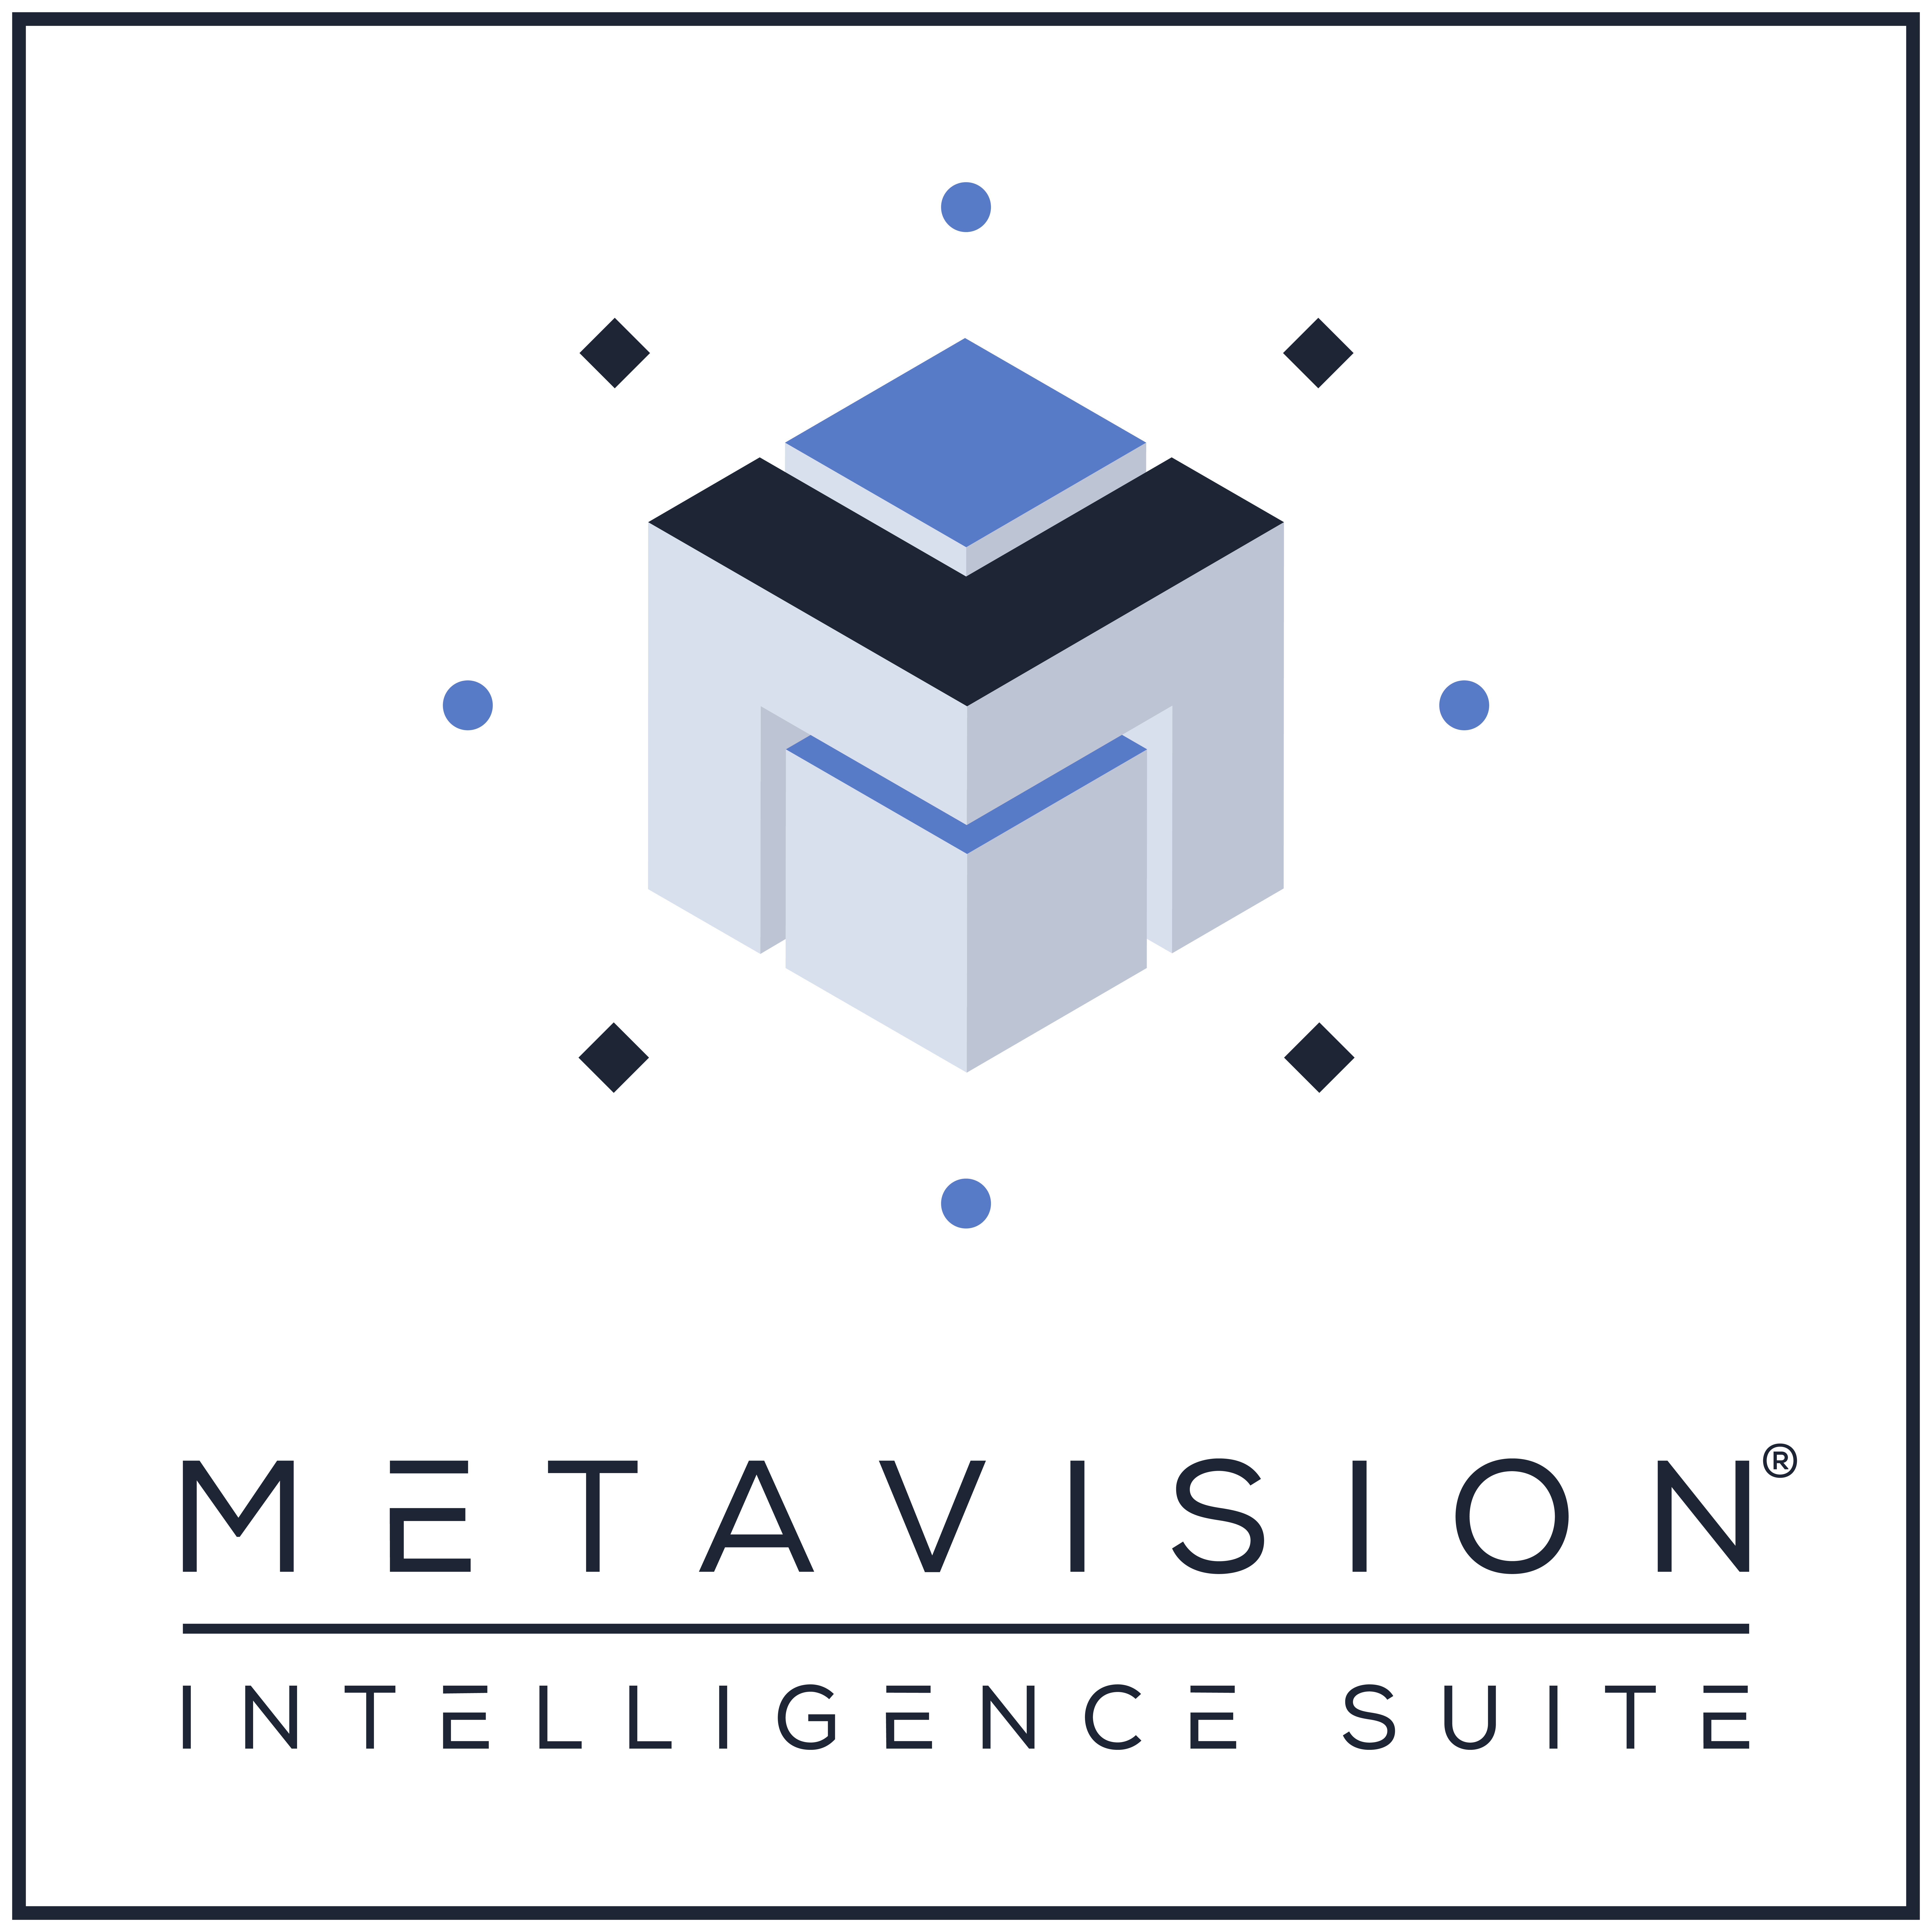 Metavision Intelligence Suite logo